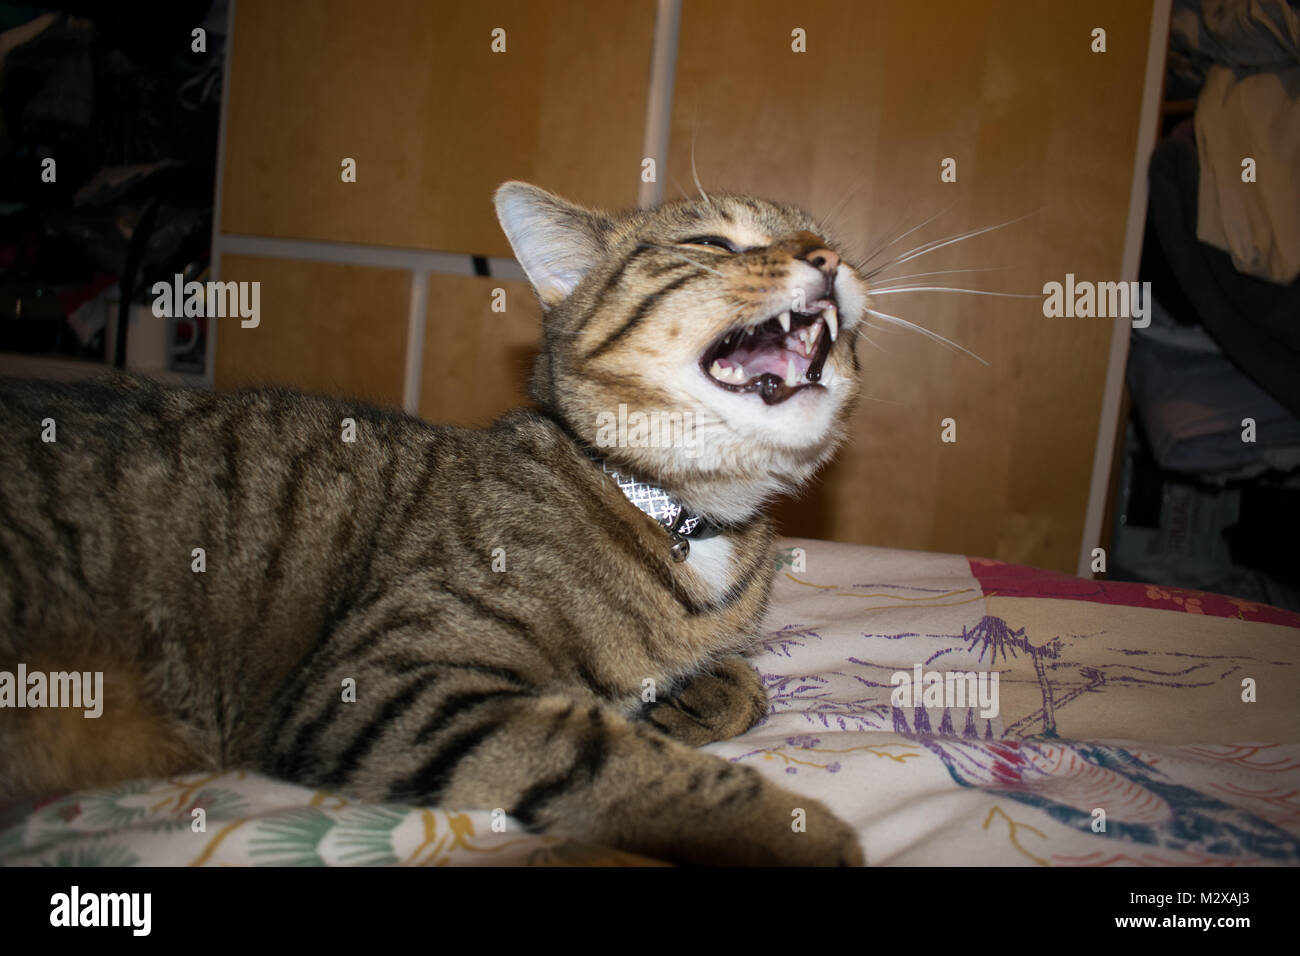 60 Top Pictures Cat Head Tilt Sneezing Gif Now I M Going To Sneeze